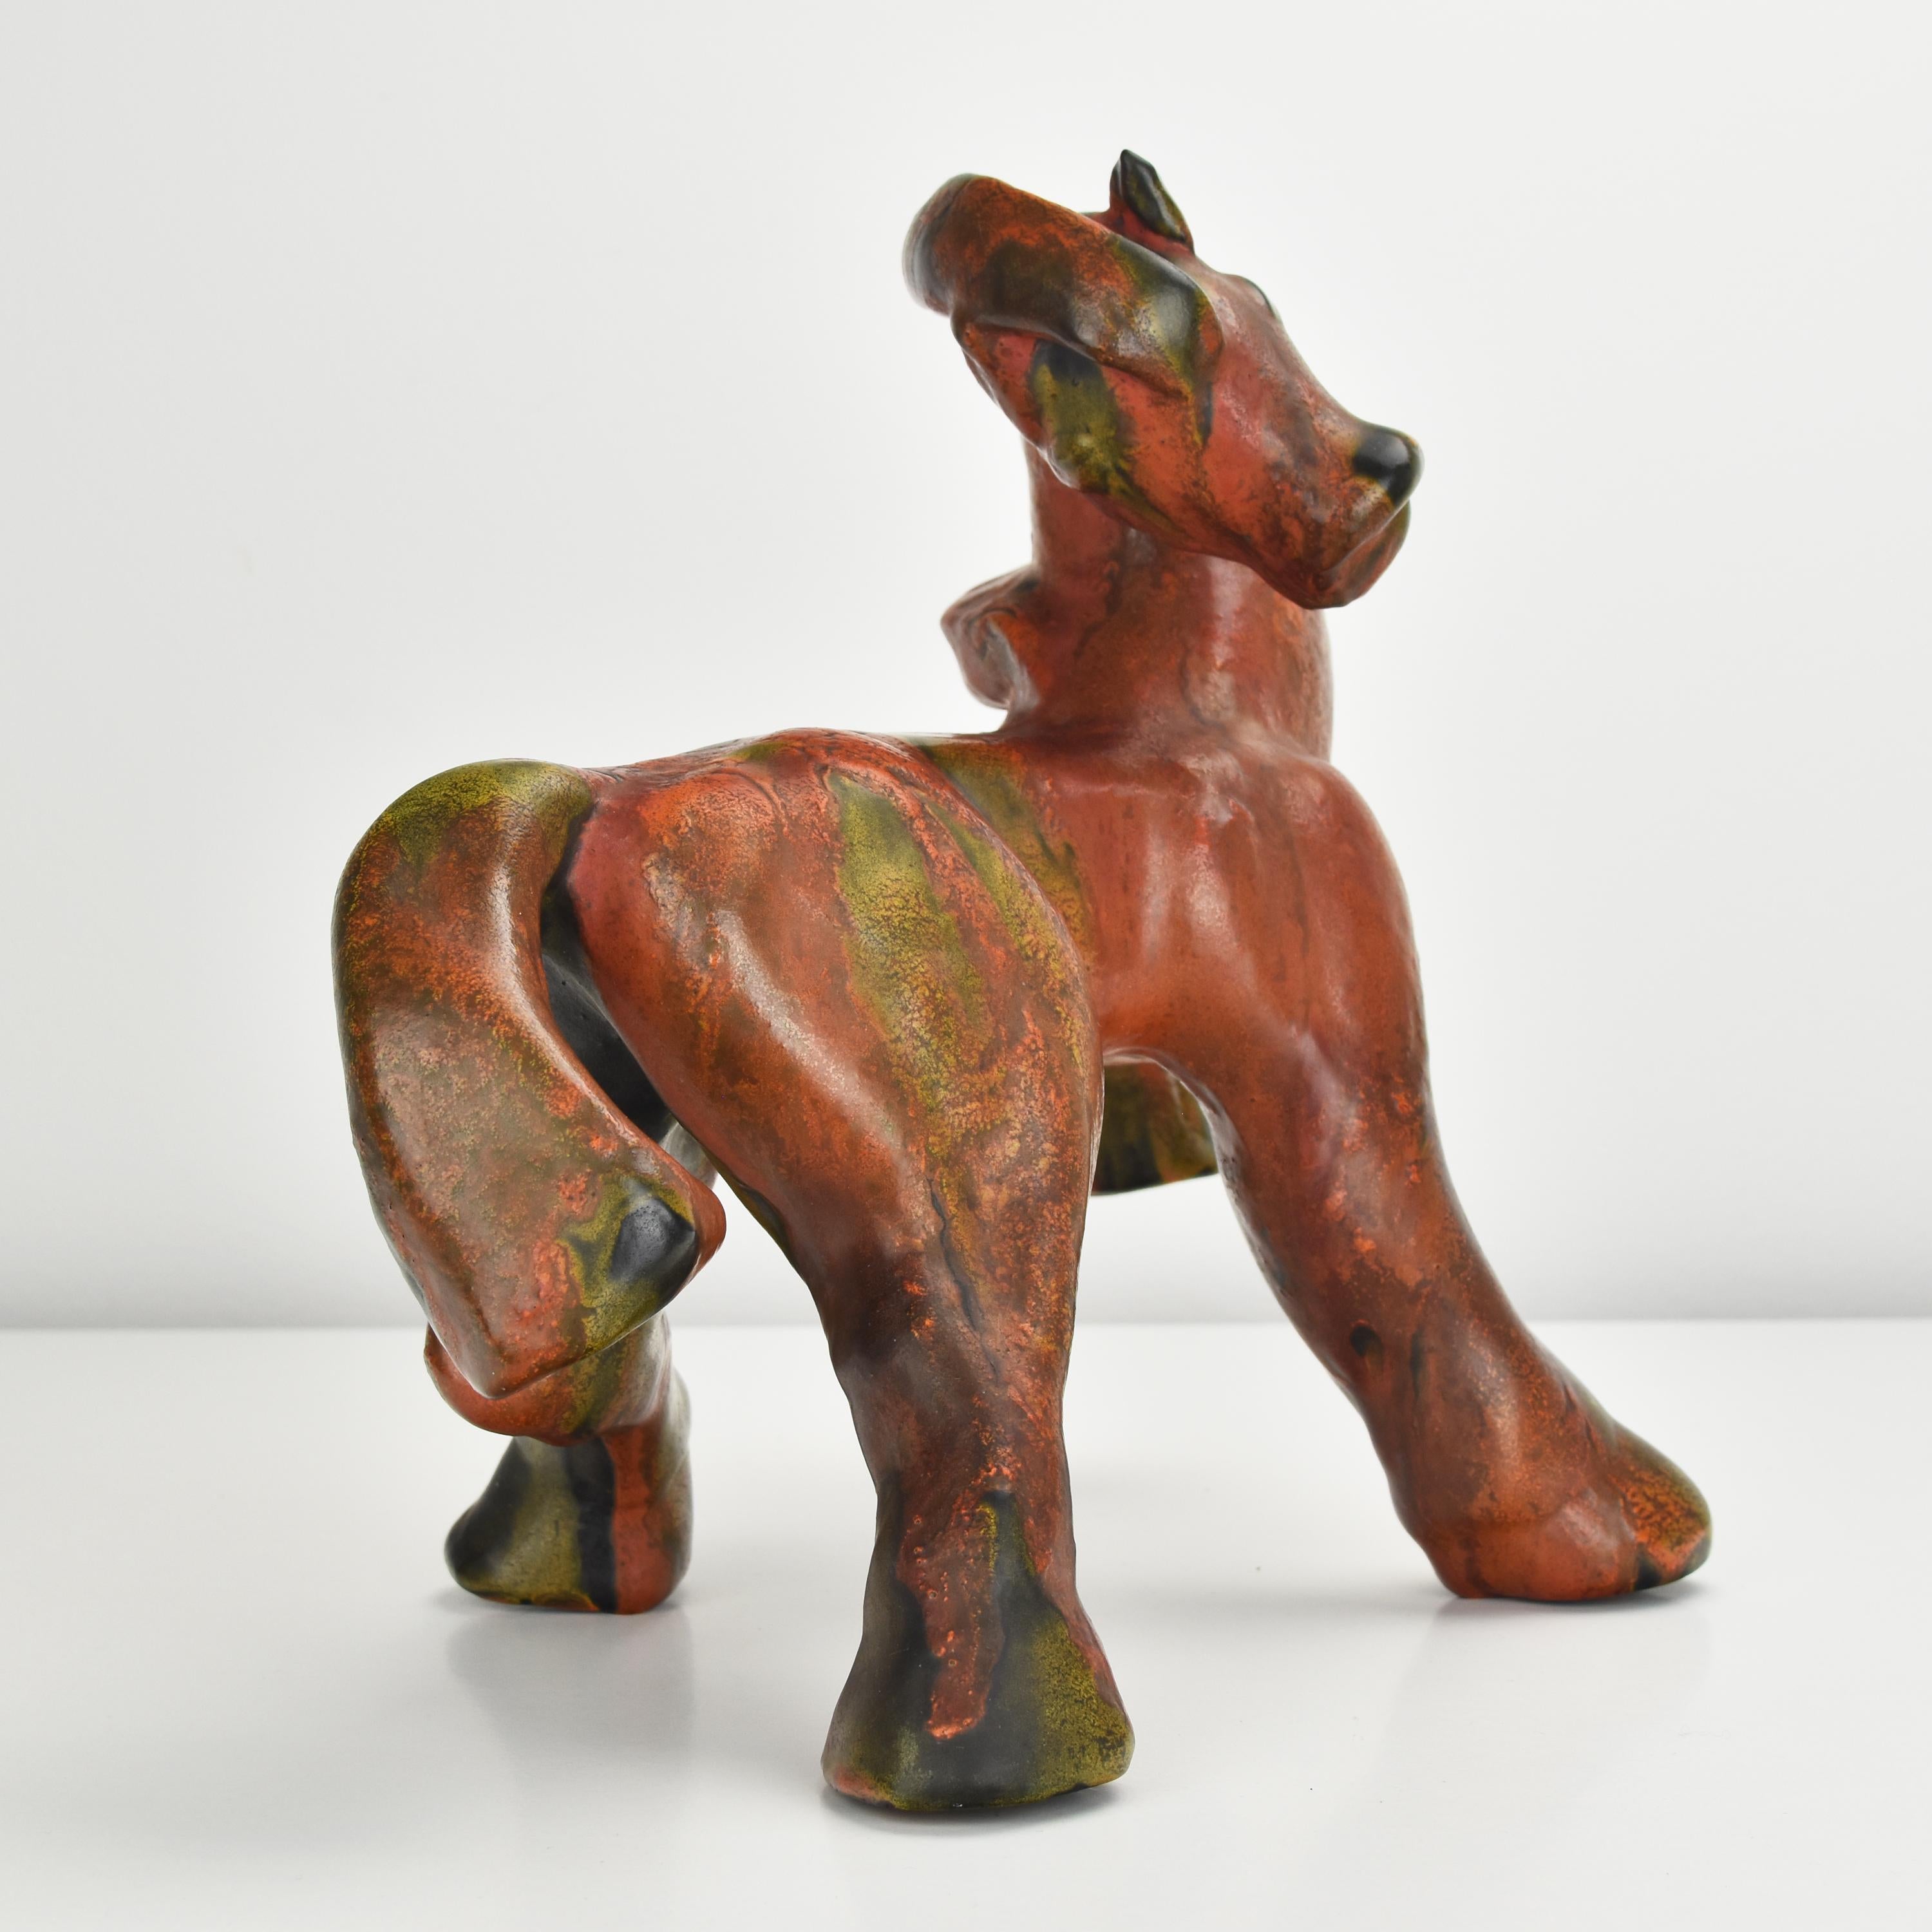 Mid-20th Century German Art Deco Pottery Ceramic Horse Sculpture Figurine After Franz Marc For Sale